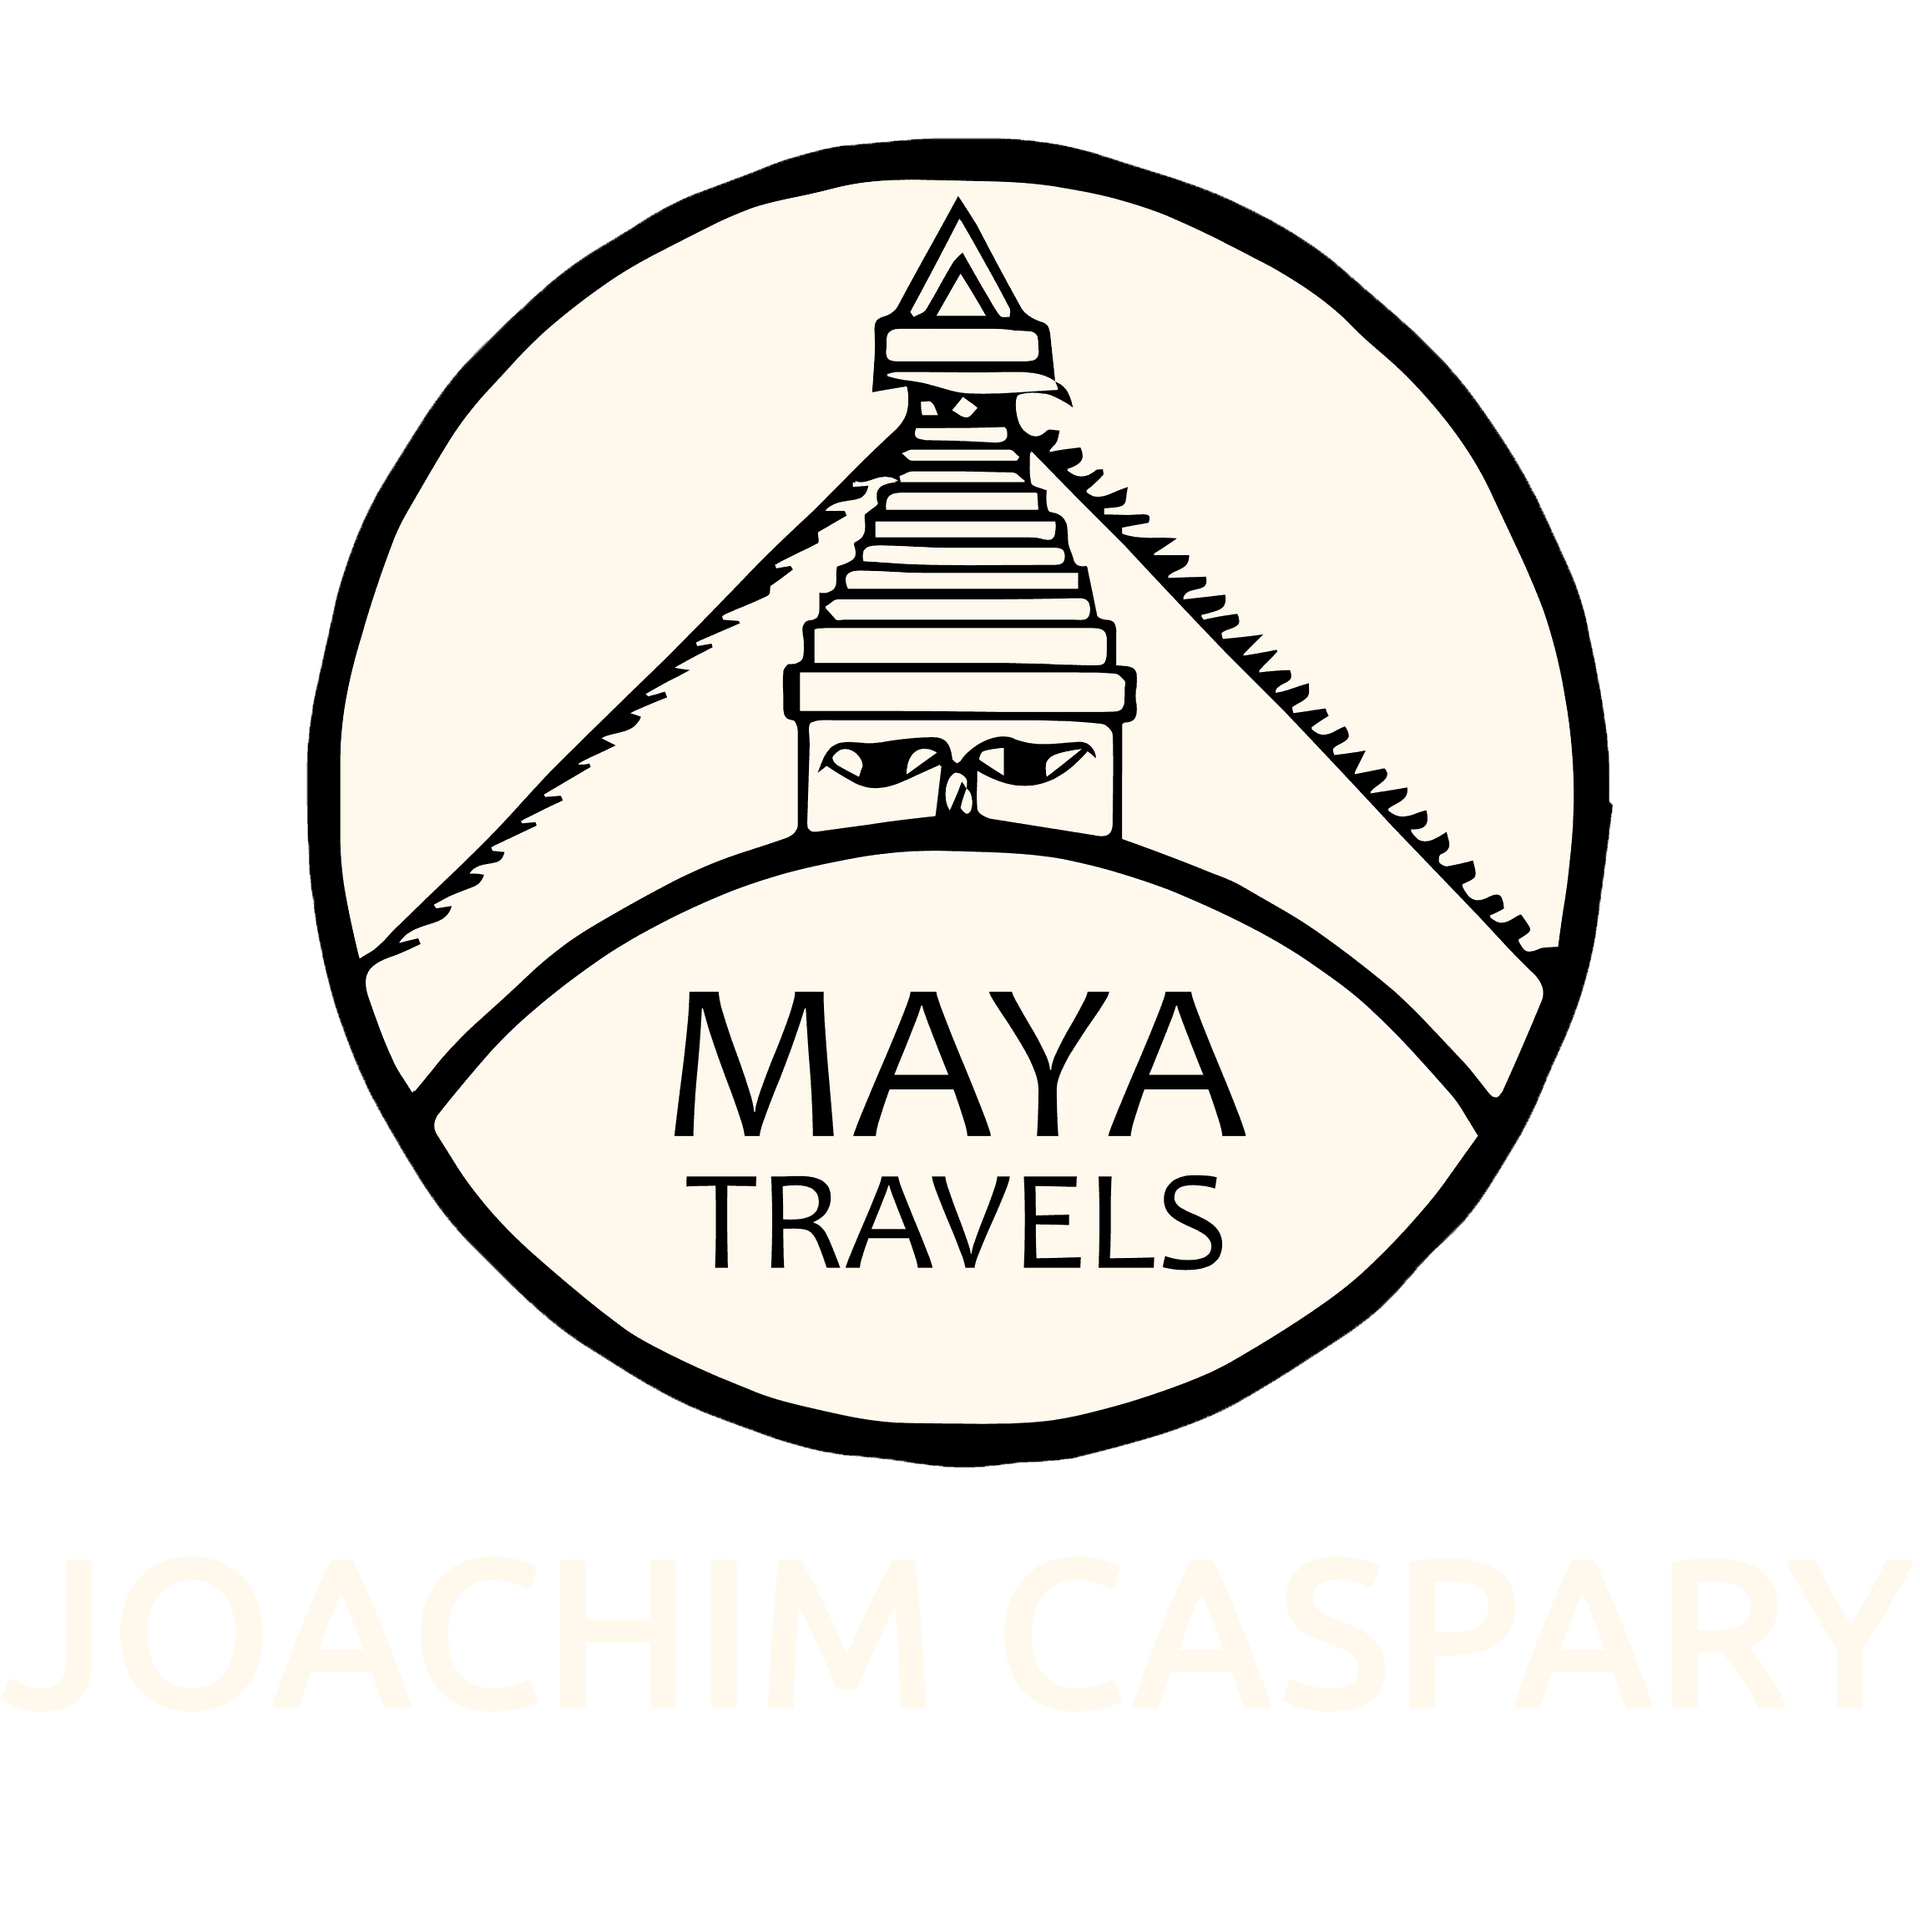 MAYA TRAVELS Joachim Caspary Asien Reiseziele